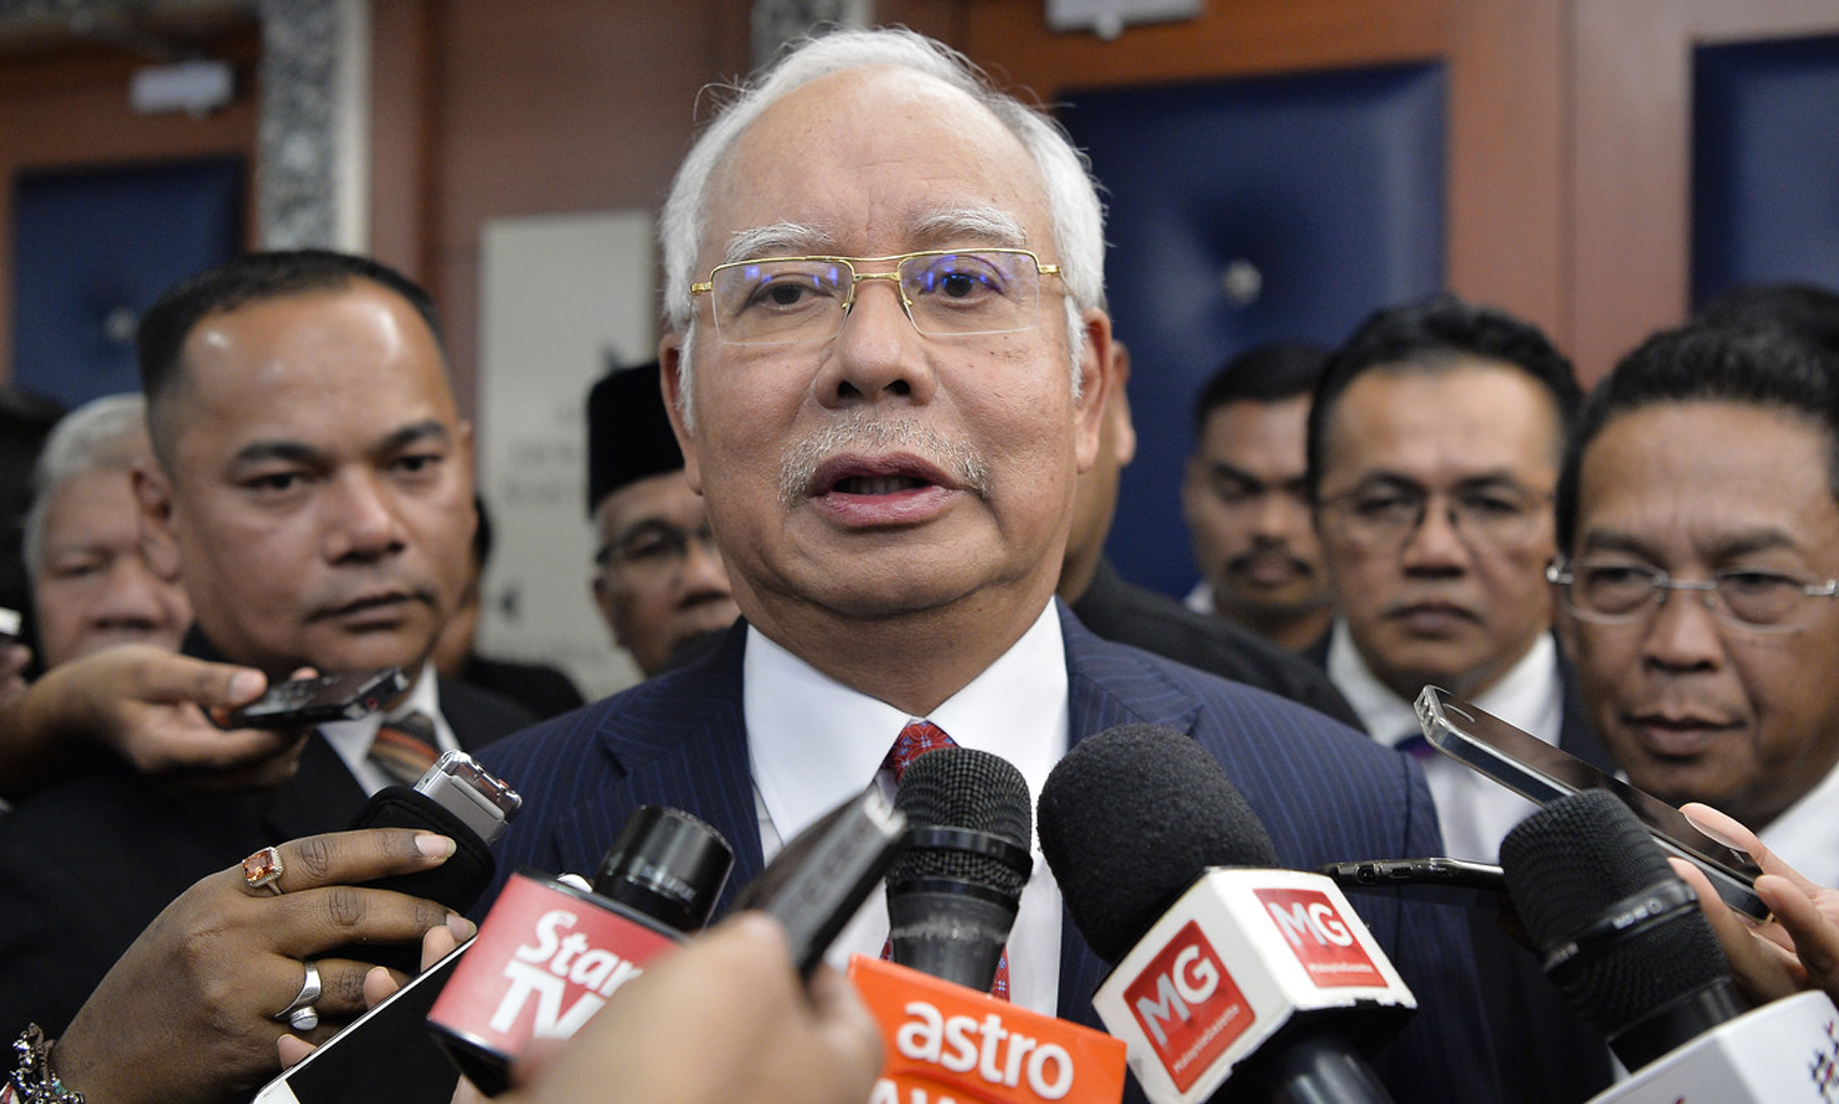 1MDB scandal: Malaysia ex-PM Najib set to stand trial